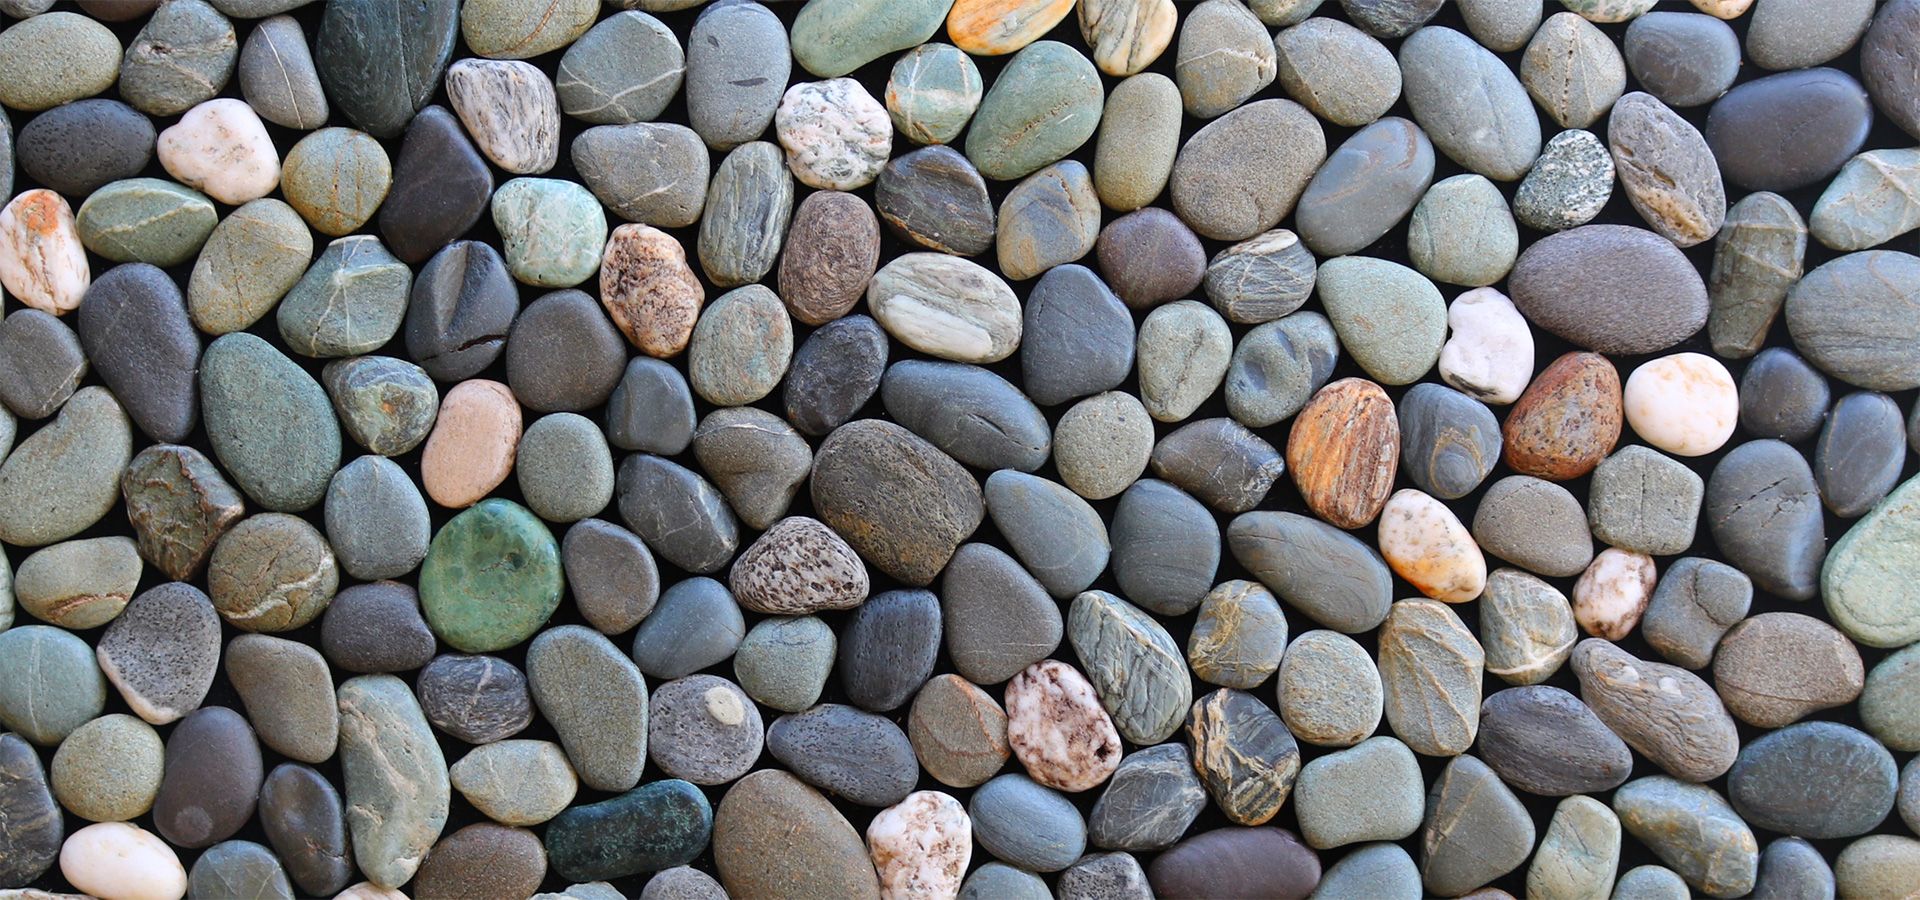 New Zealand made stonemats